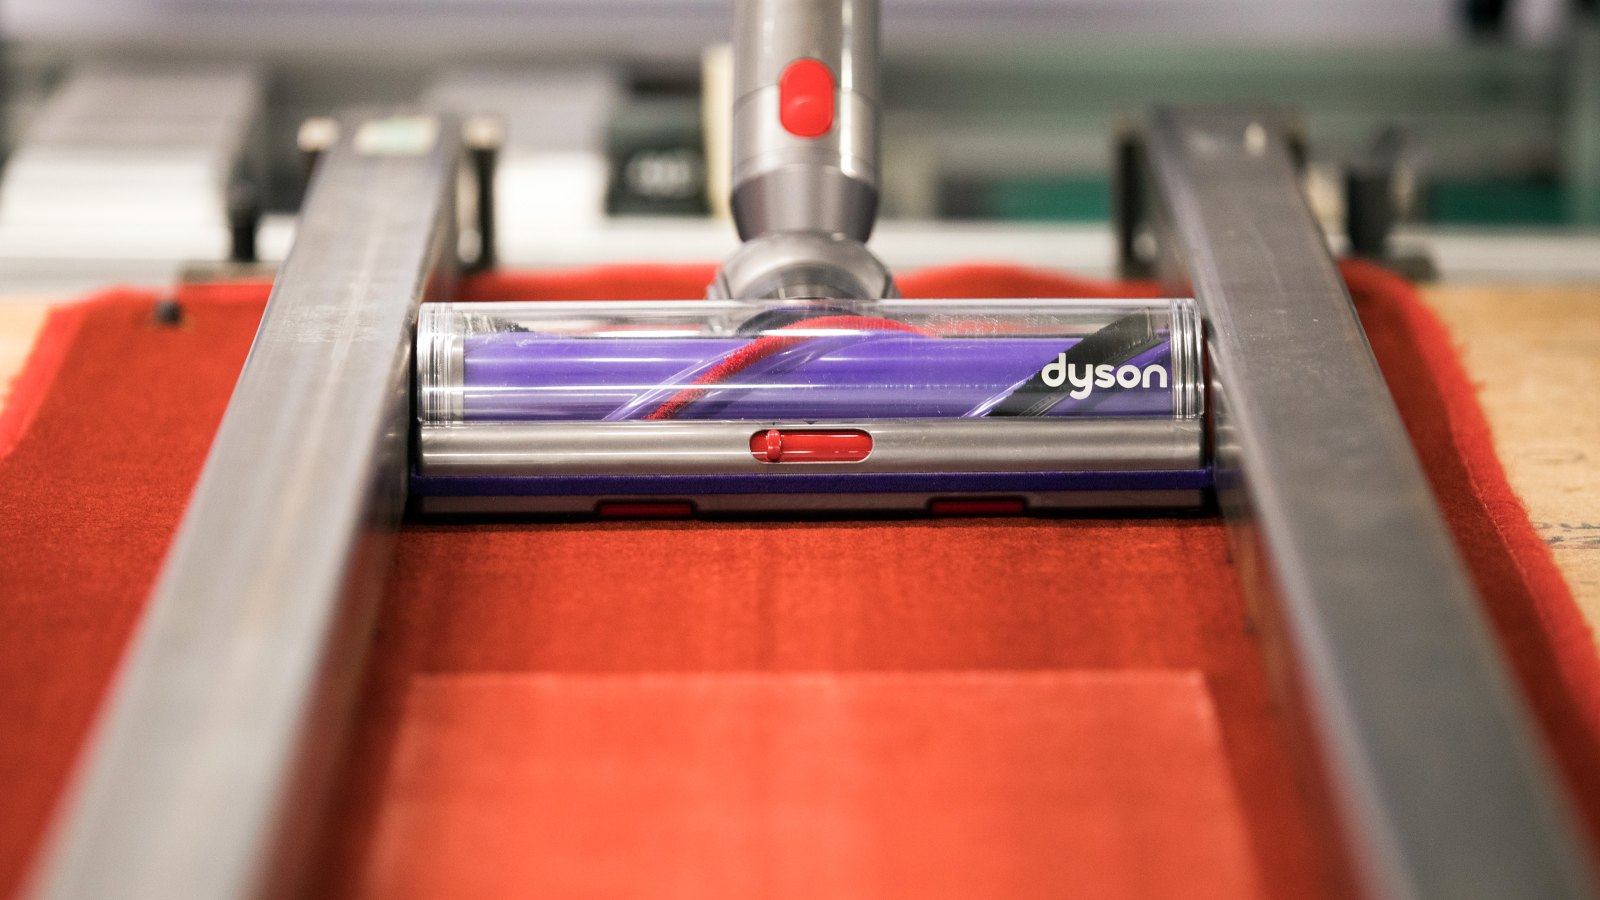 A Dyson Cyclone V10 cord-free vacuum